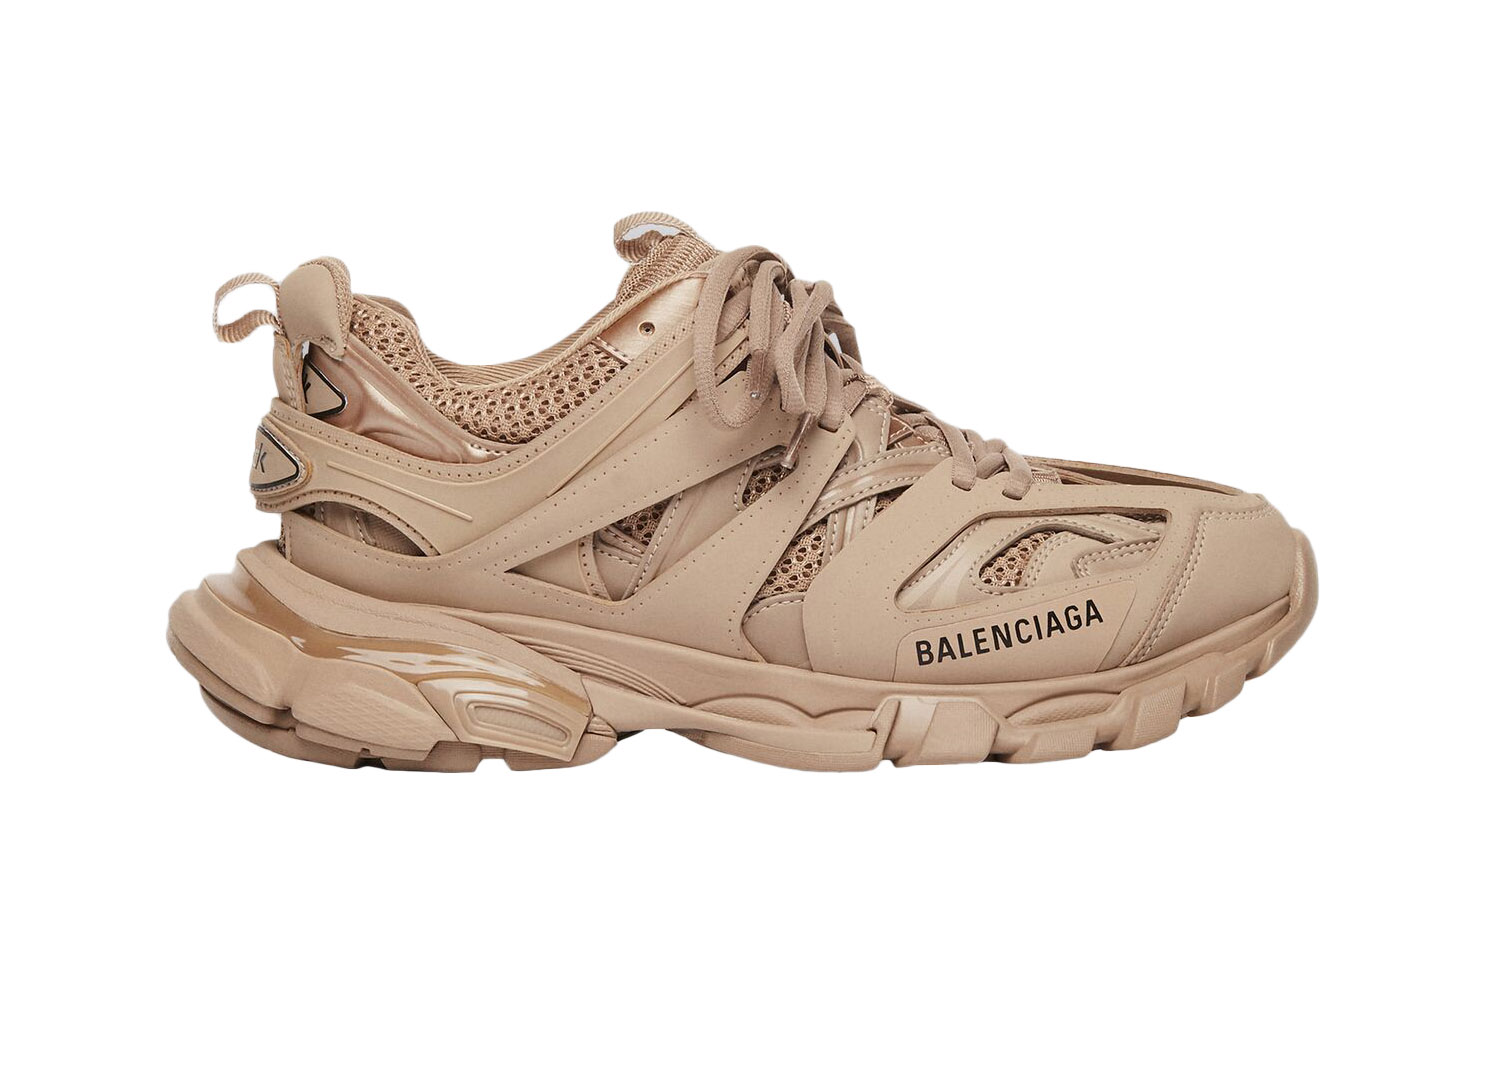 Balenciaga Paris Sneaker Athletic Shoes for Women | Mercari